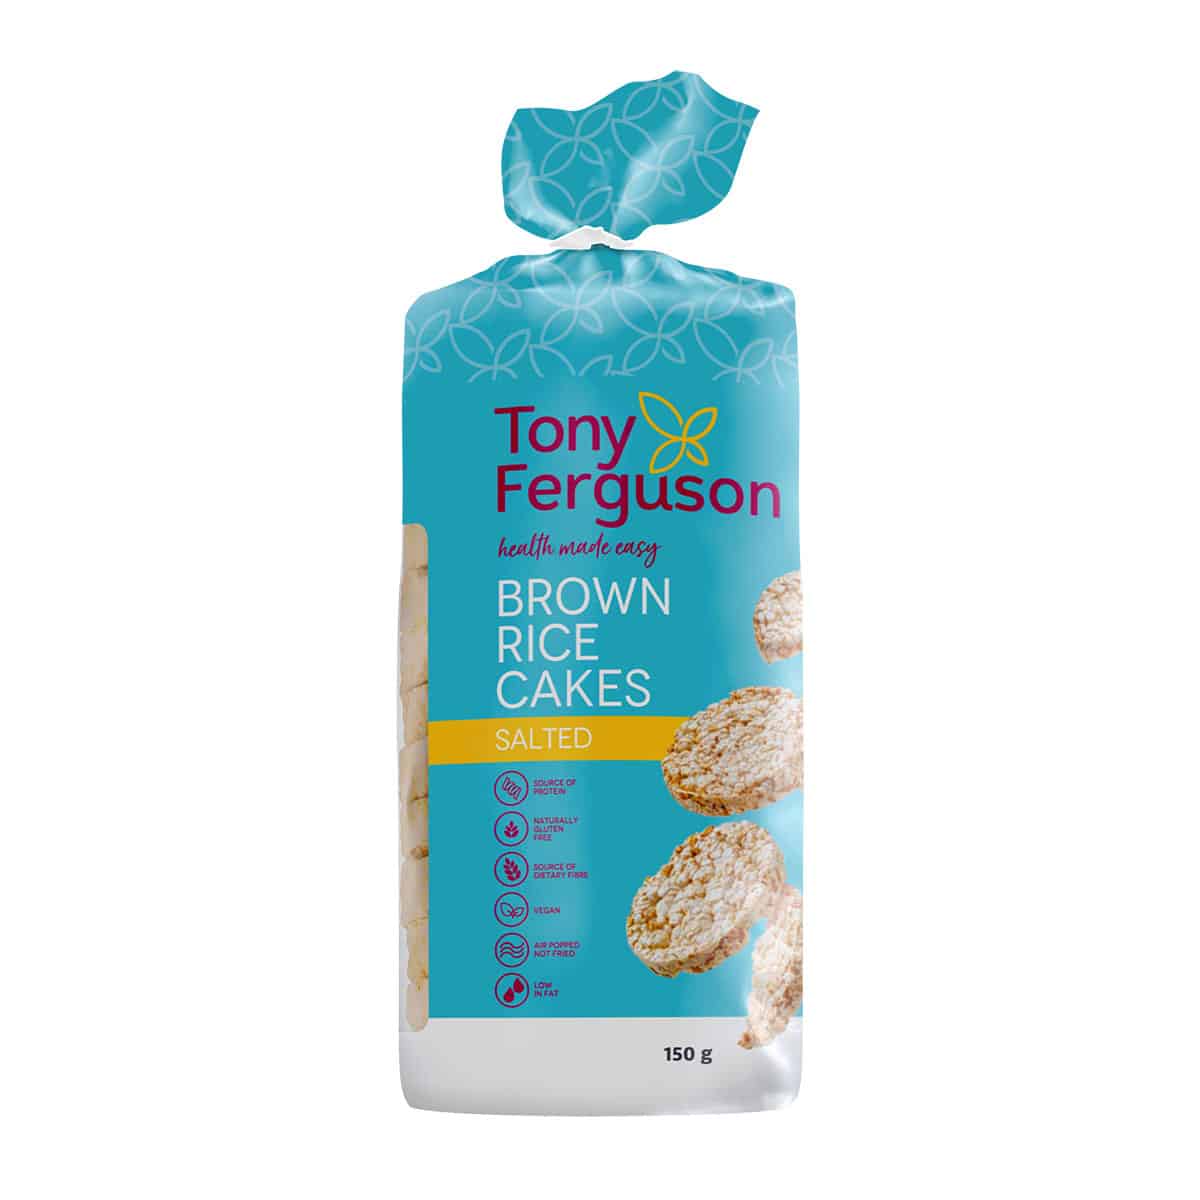 Tony Ferguson Brown Rice Cakes Salted - 150g